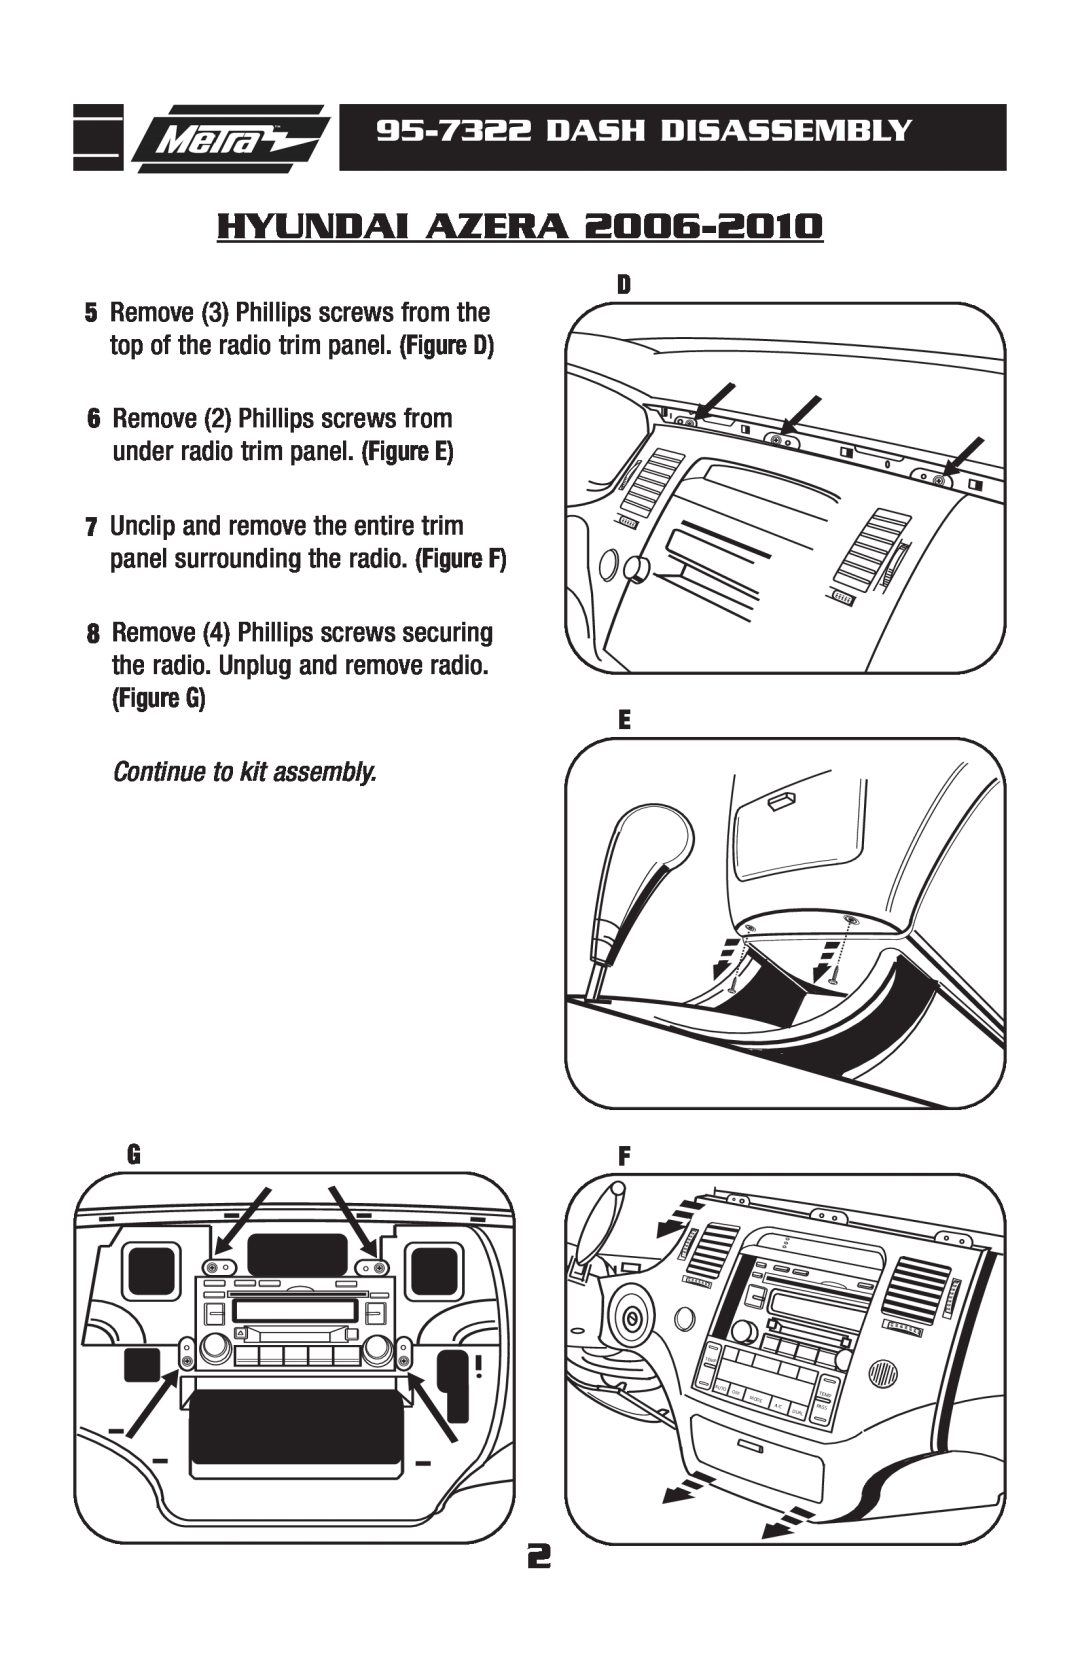 Metra Electronics installation instructions Figure G E, Continue to kit assembly, Hyundai Azera, 95-7322DASH DISASSEMBLY 